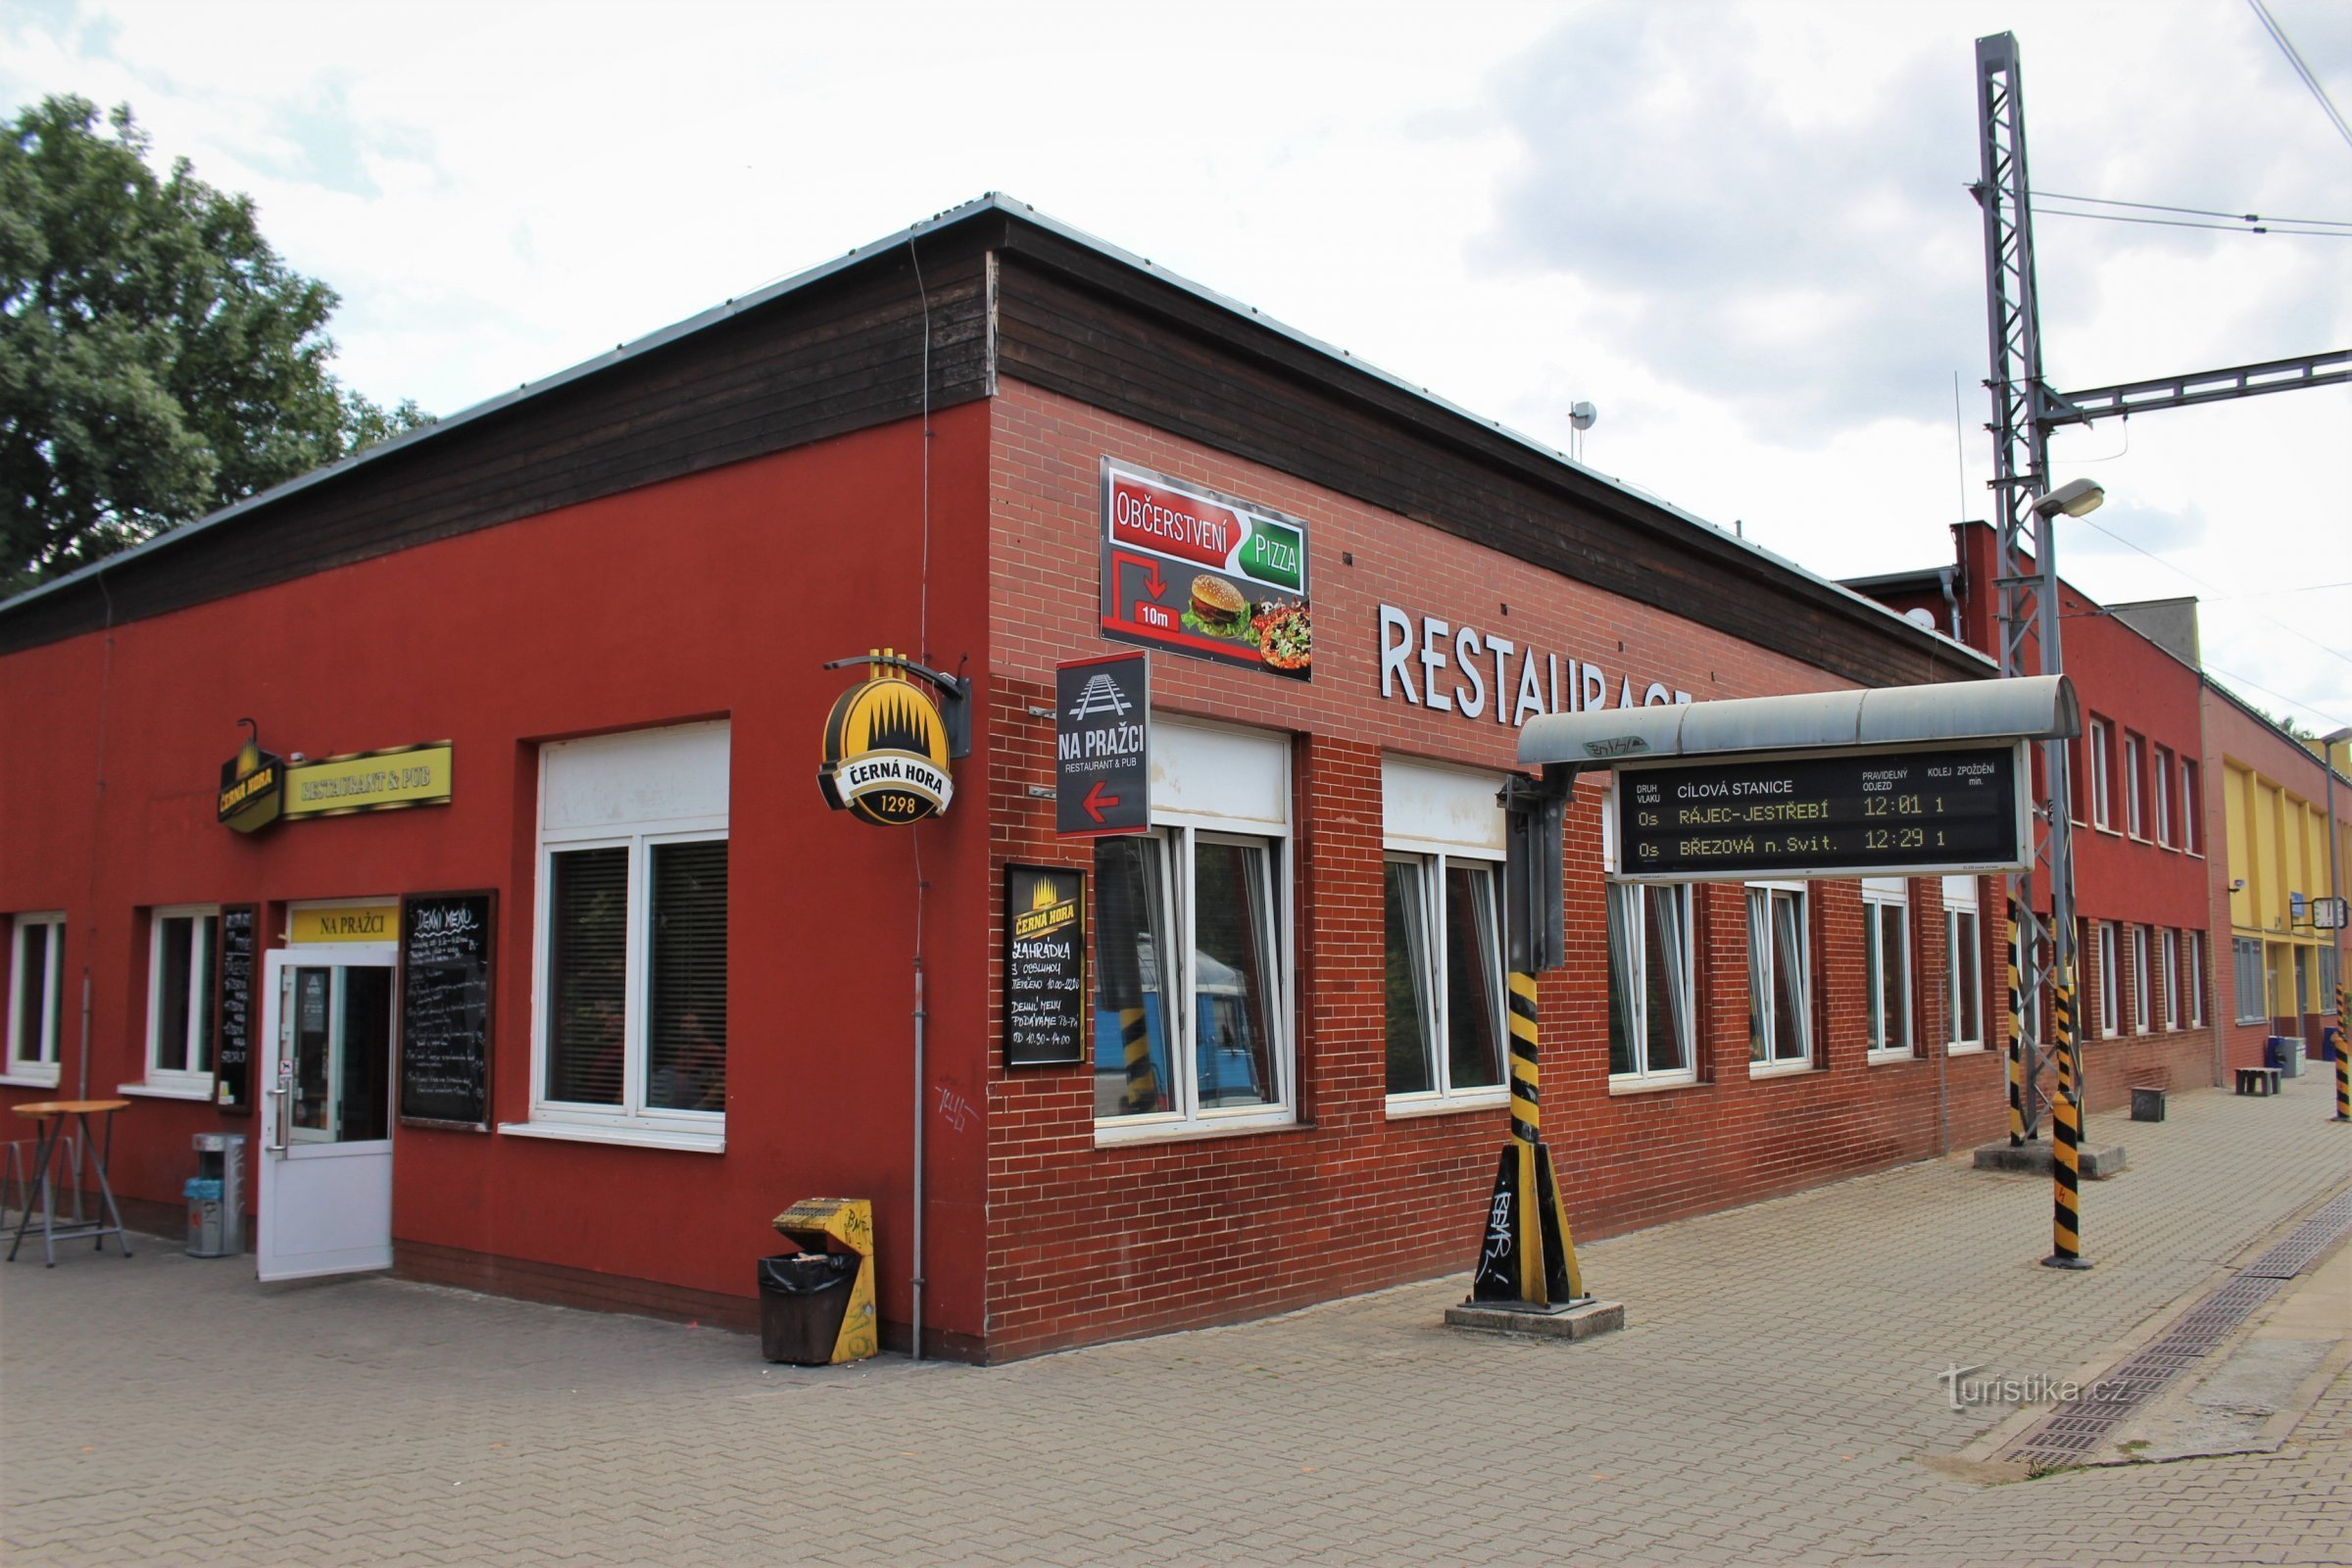 Blanenské nádraží with restaurant Na pražci